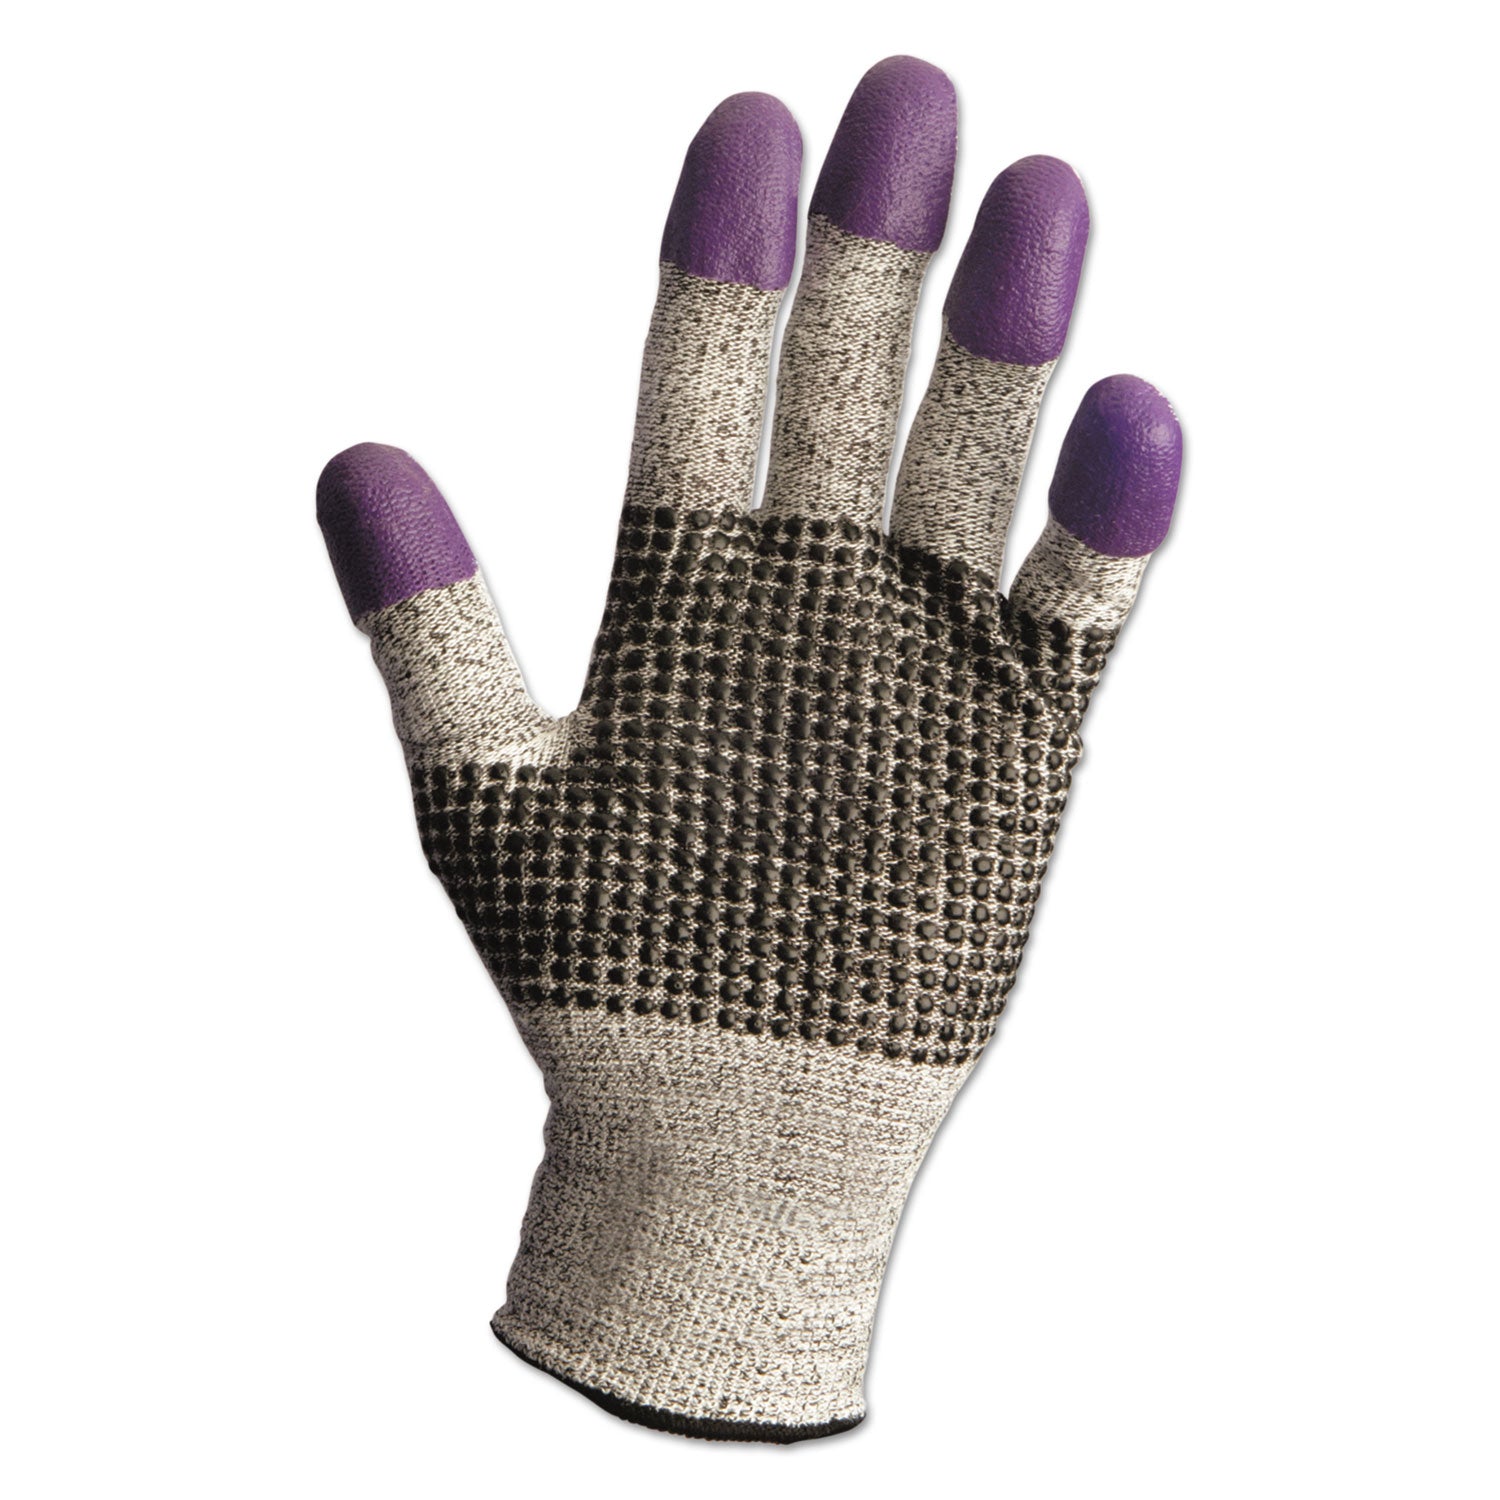 g60-purple-nitrile-cut-resistant-glove-220mm-length-small-size-7-blue-white-pair_kcc97430 - 1